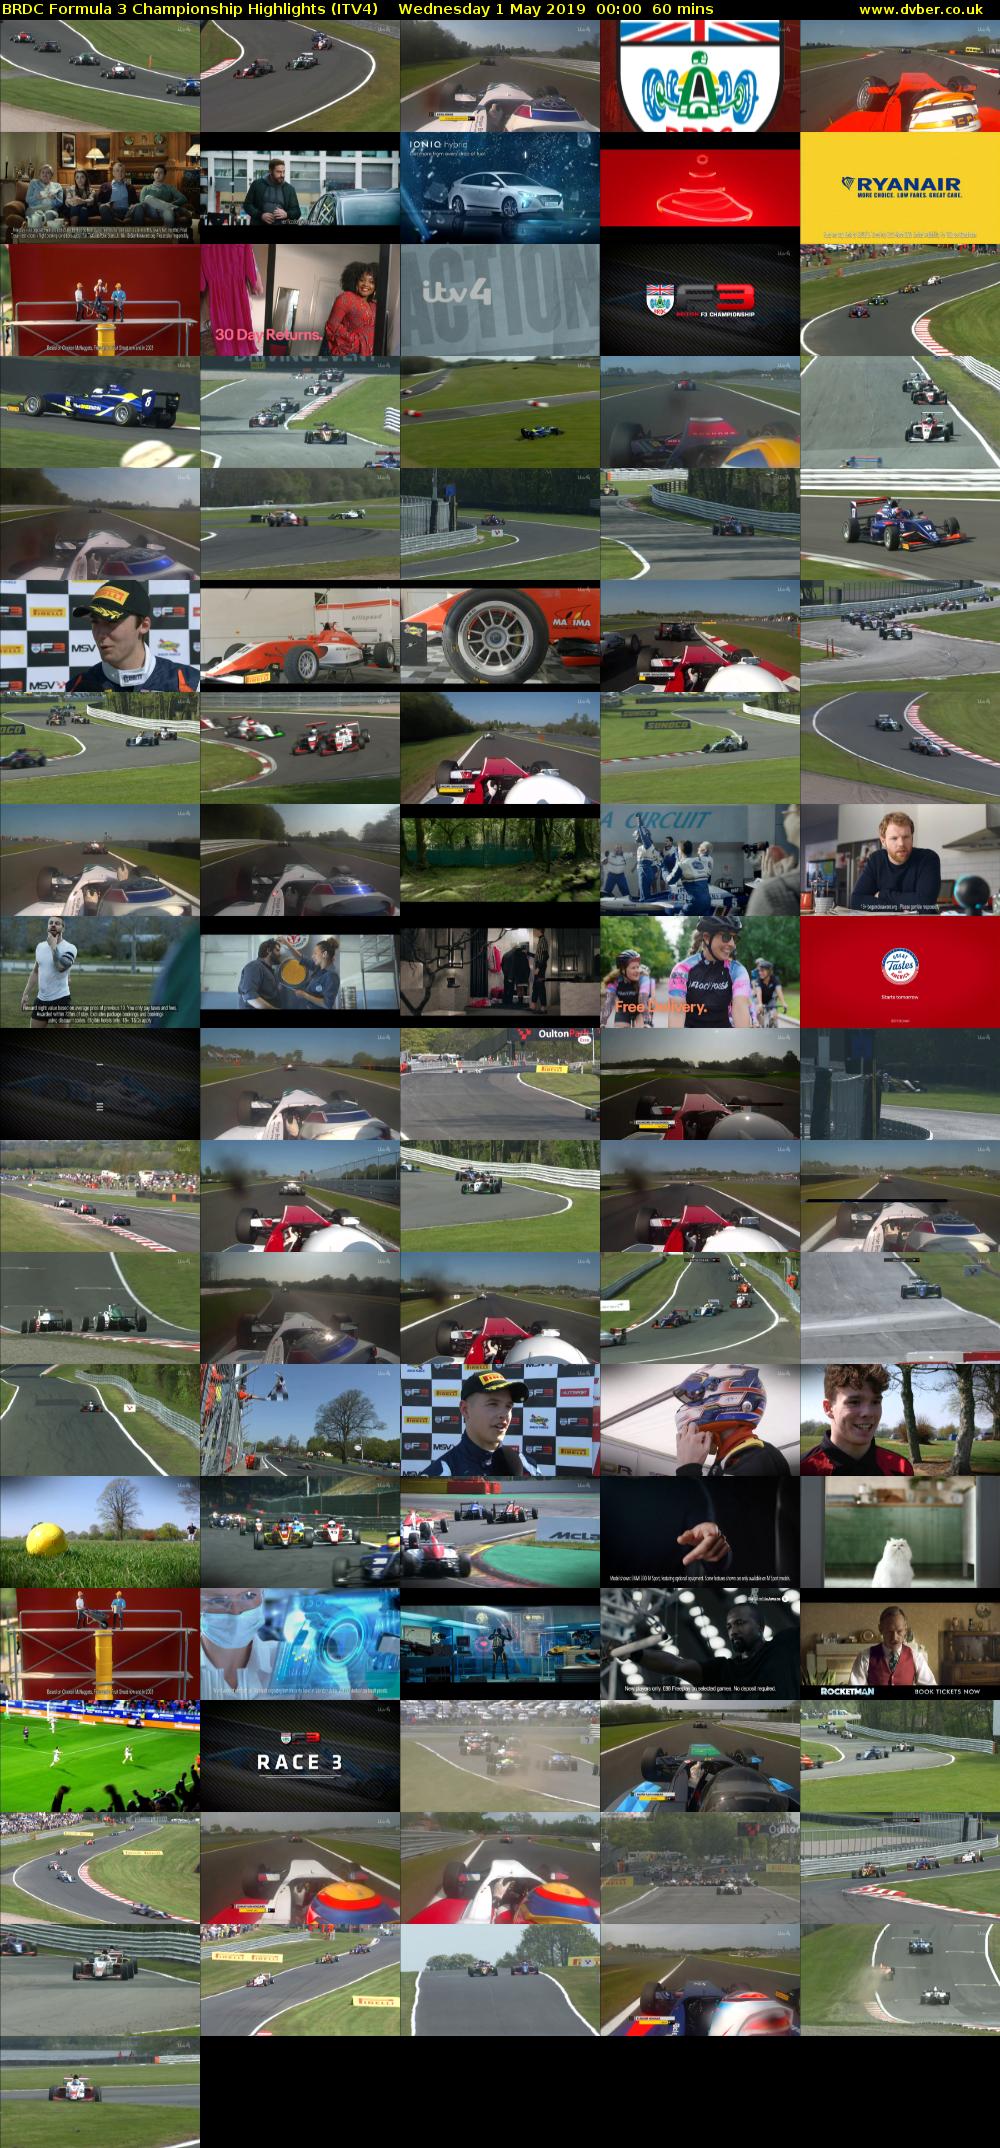 BRDC Formula 3 Championship Highlights (ITV4) Wednesday 1 May 2019 00:00 - 01:00